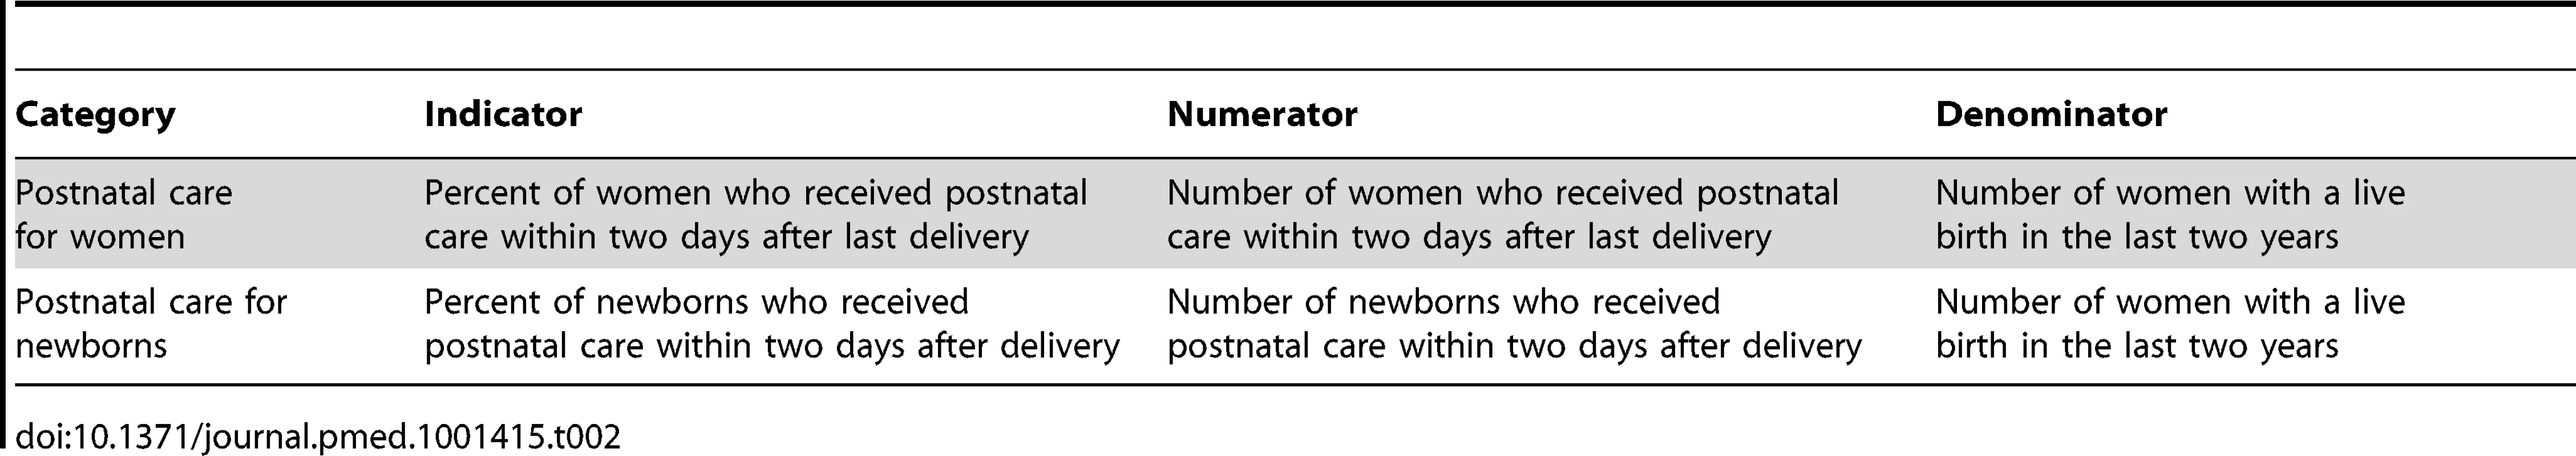 Global indicators for postnatal care coverage, 2010.